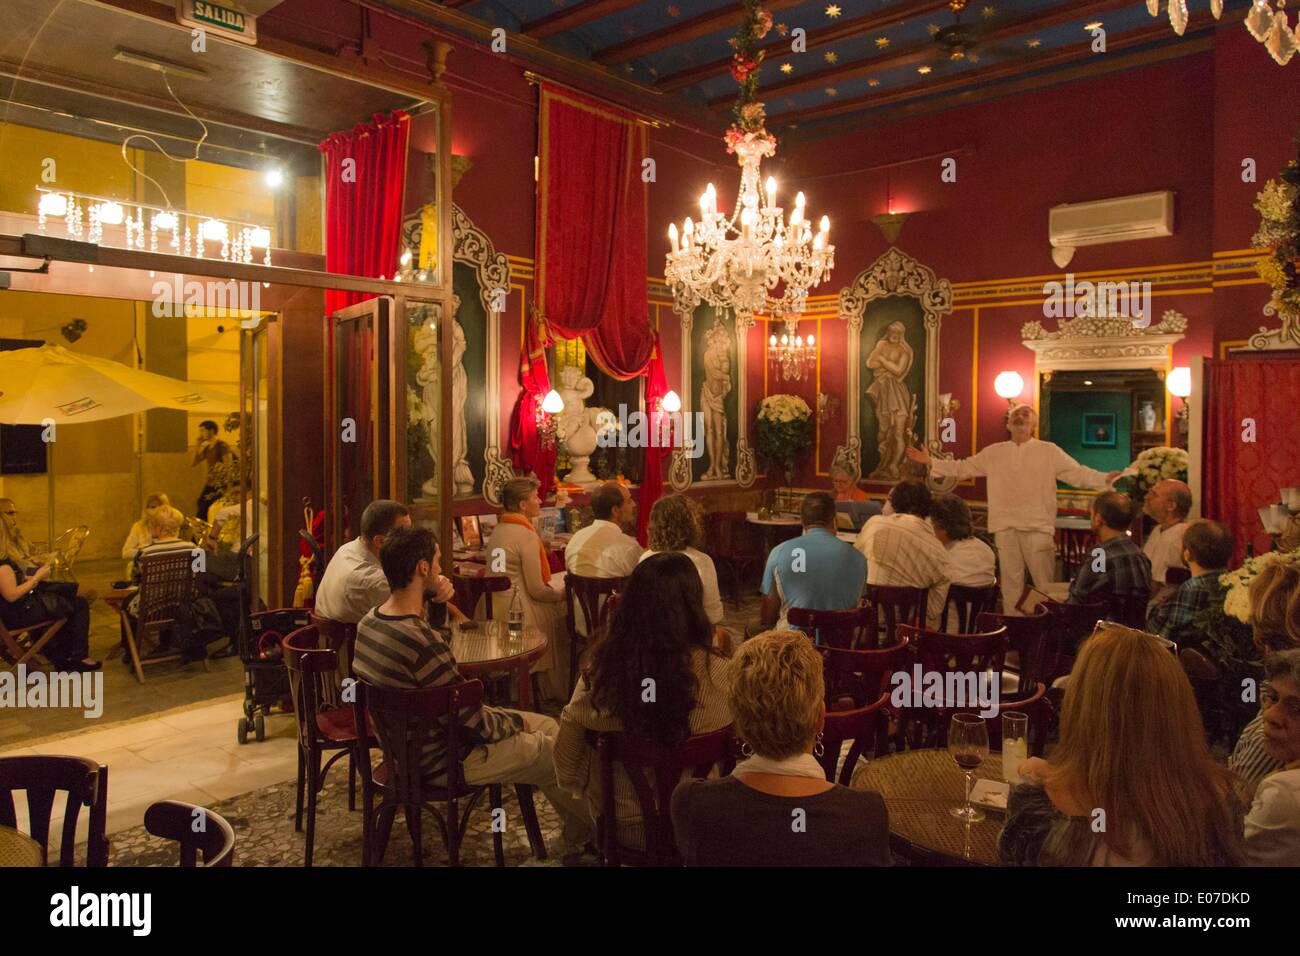 cultural cafe Cafe de las Horas in Valencia 29.10.2013 Stock Photo - Alamy